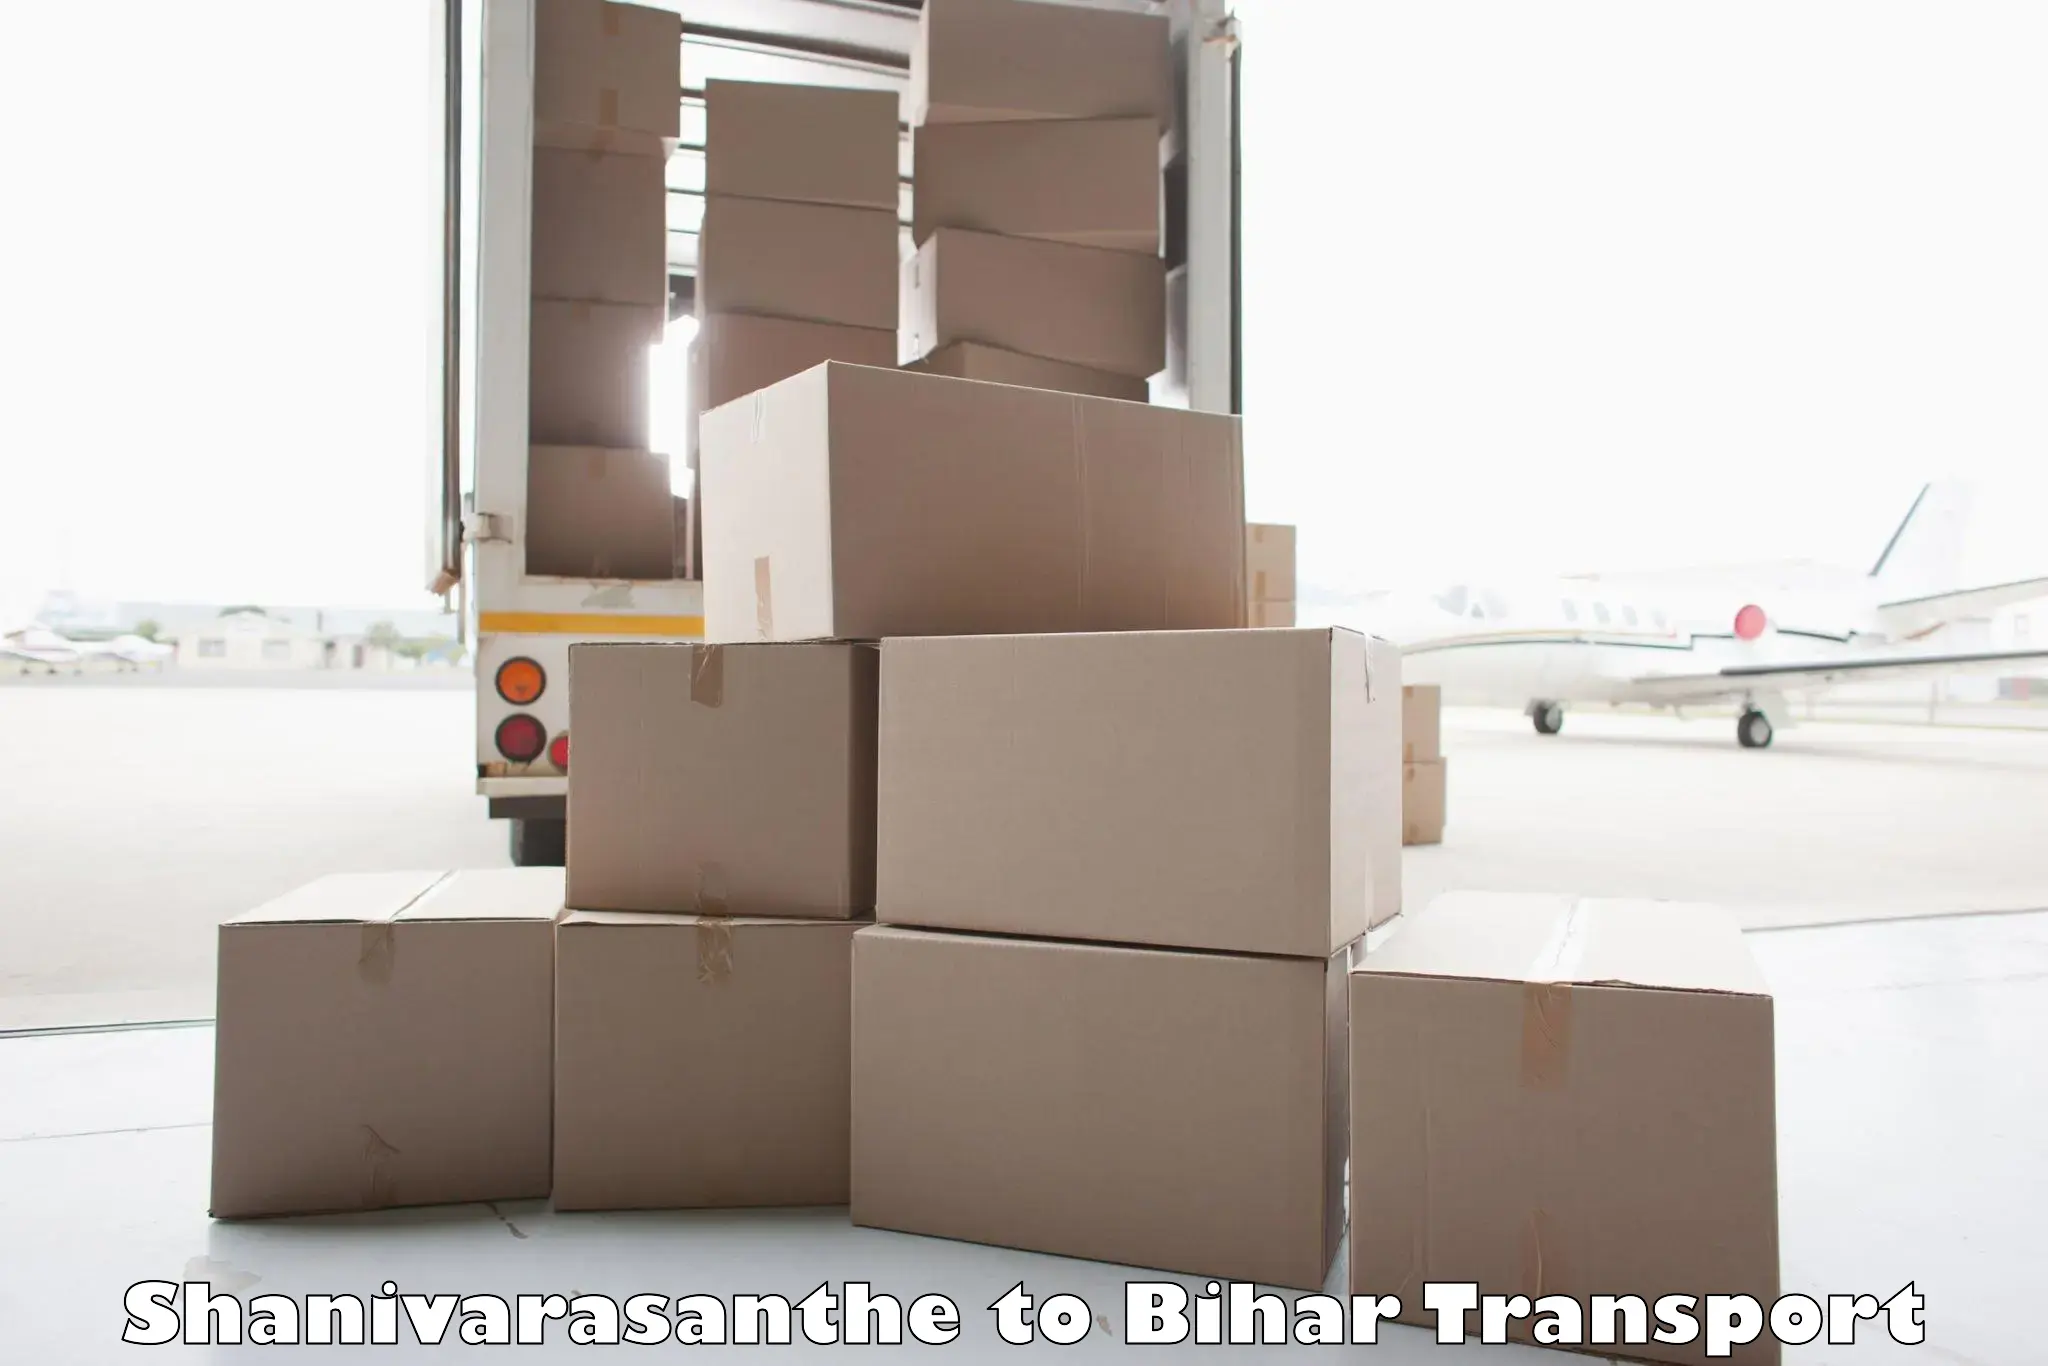 Container transport service Shanivarasanthe to Minapur